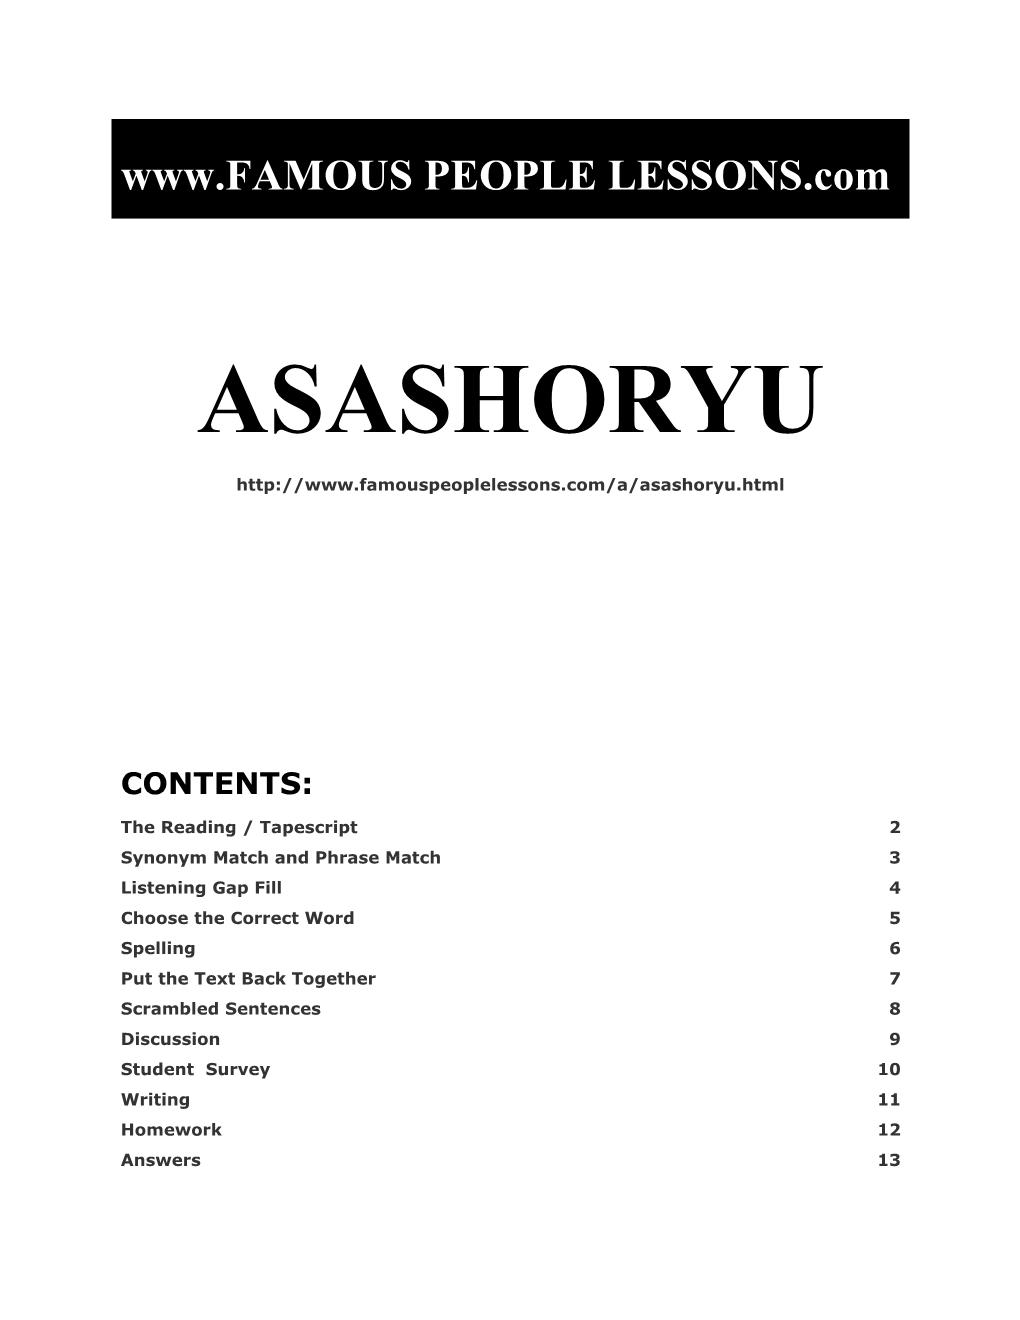 Famous People Lessons - Asashoryu